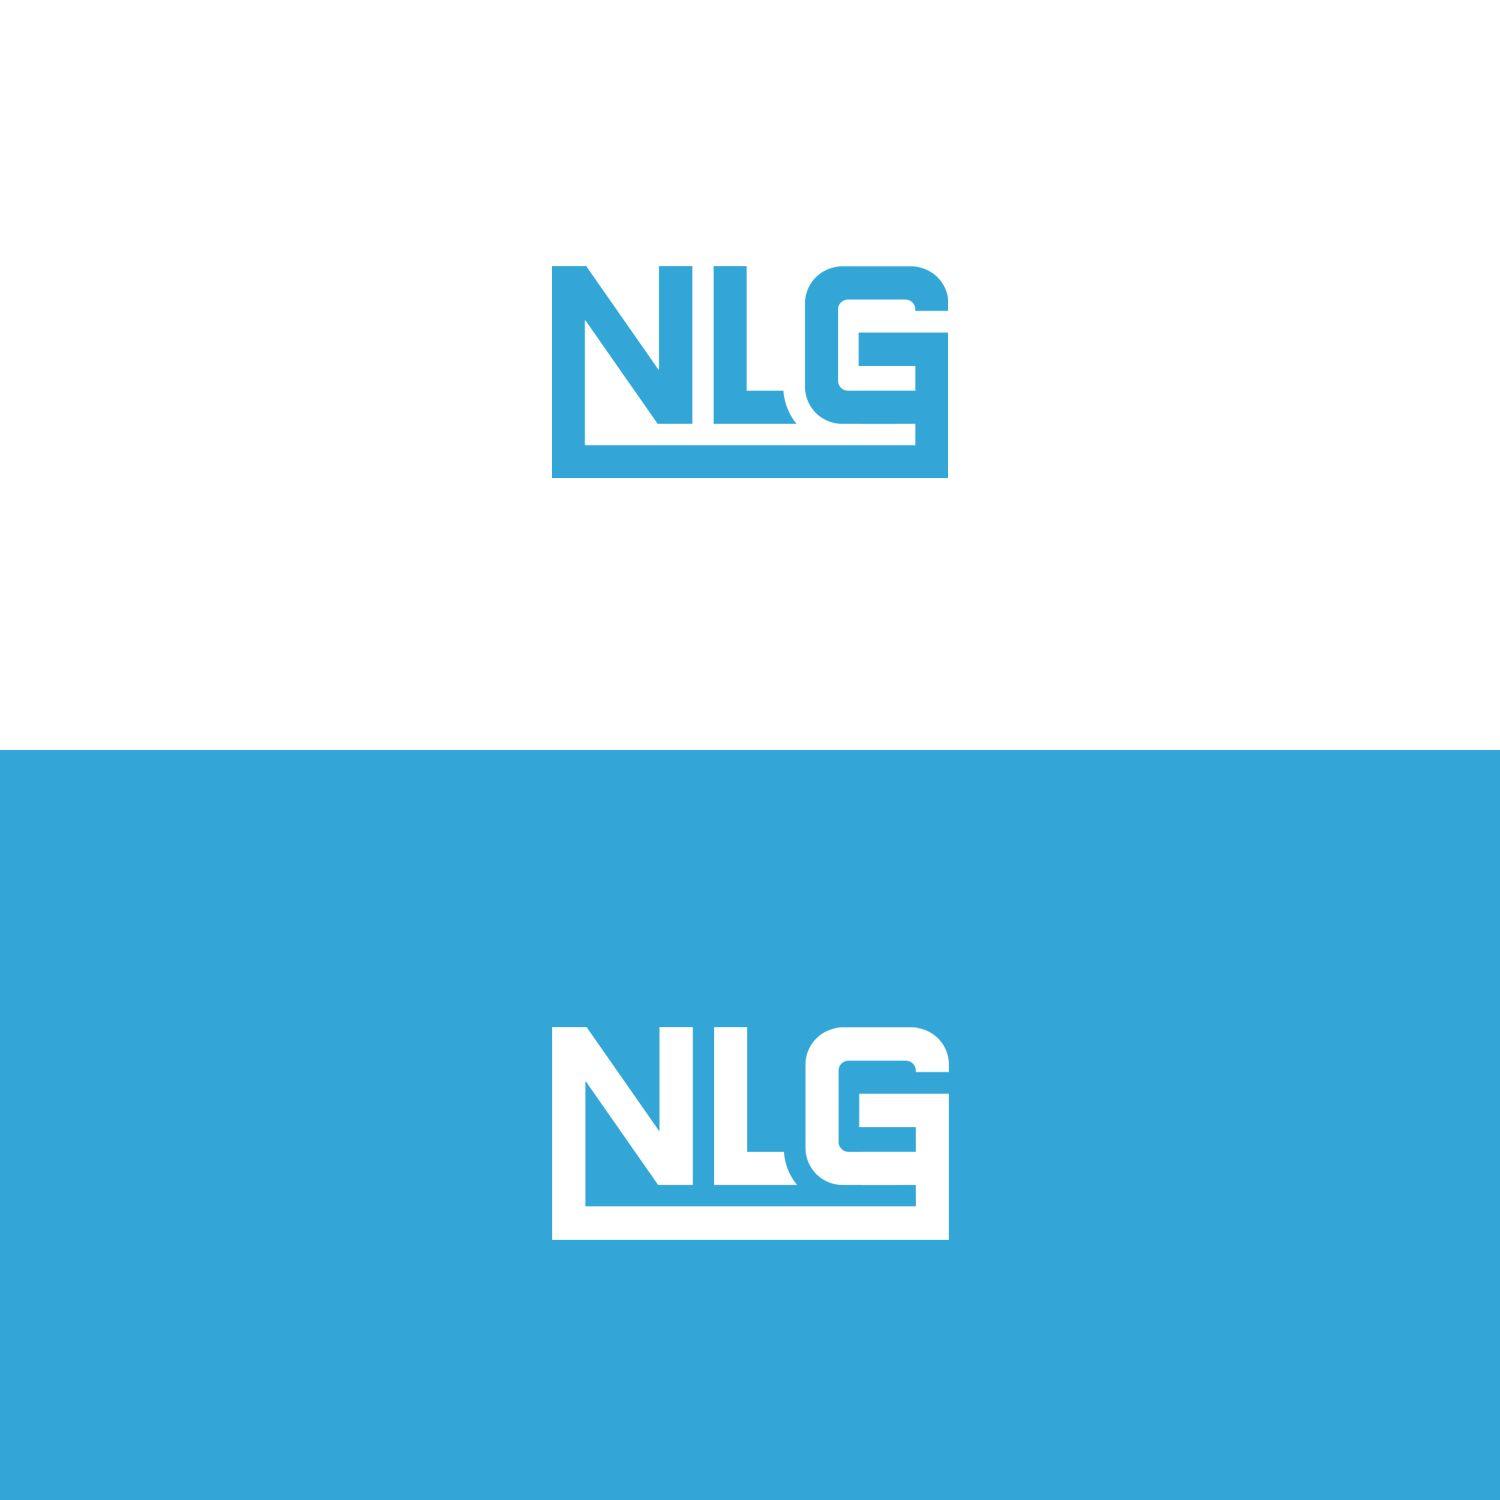 NLG Logo - Serious, Masculine, Law Firm Logo Design for NLG by vadim reko ...